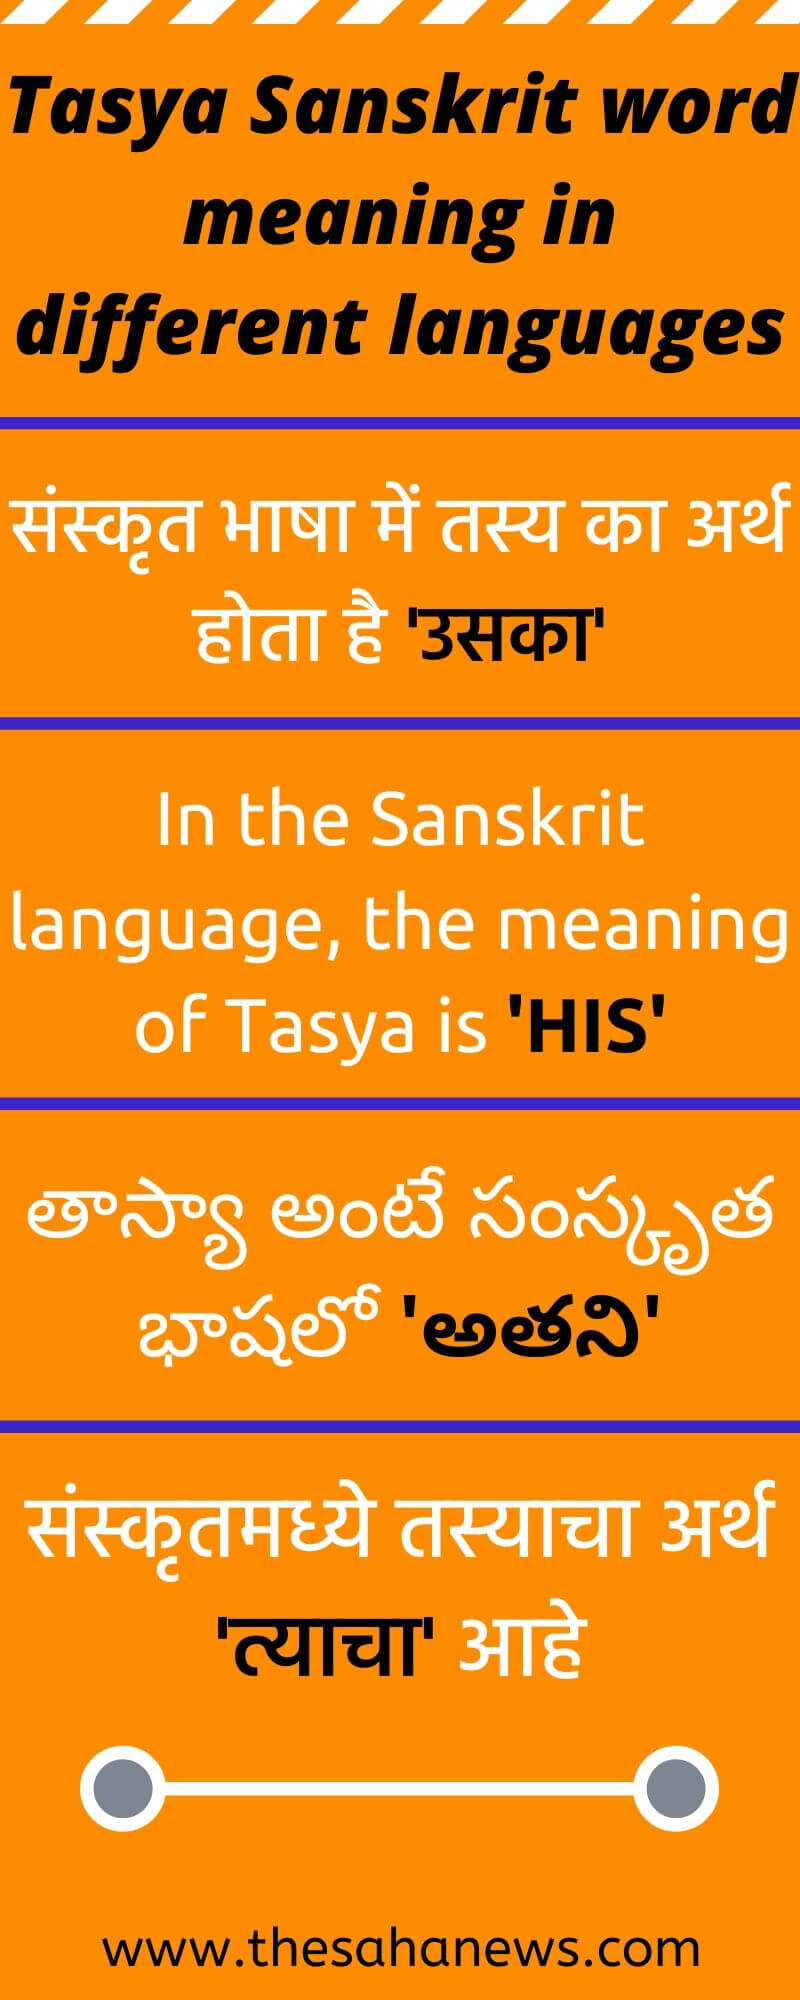 ᐈTasya sanskrit word meaning in hindi, telugu, marathi, english